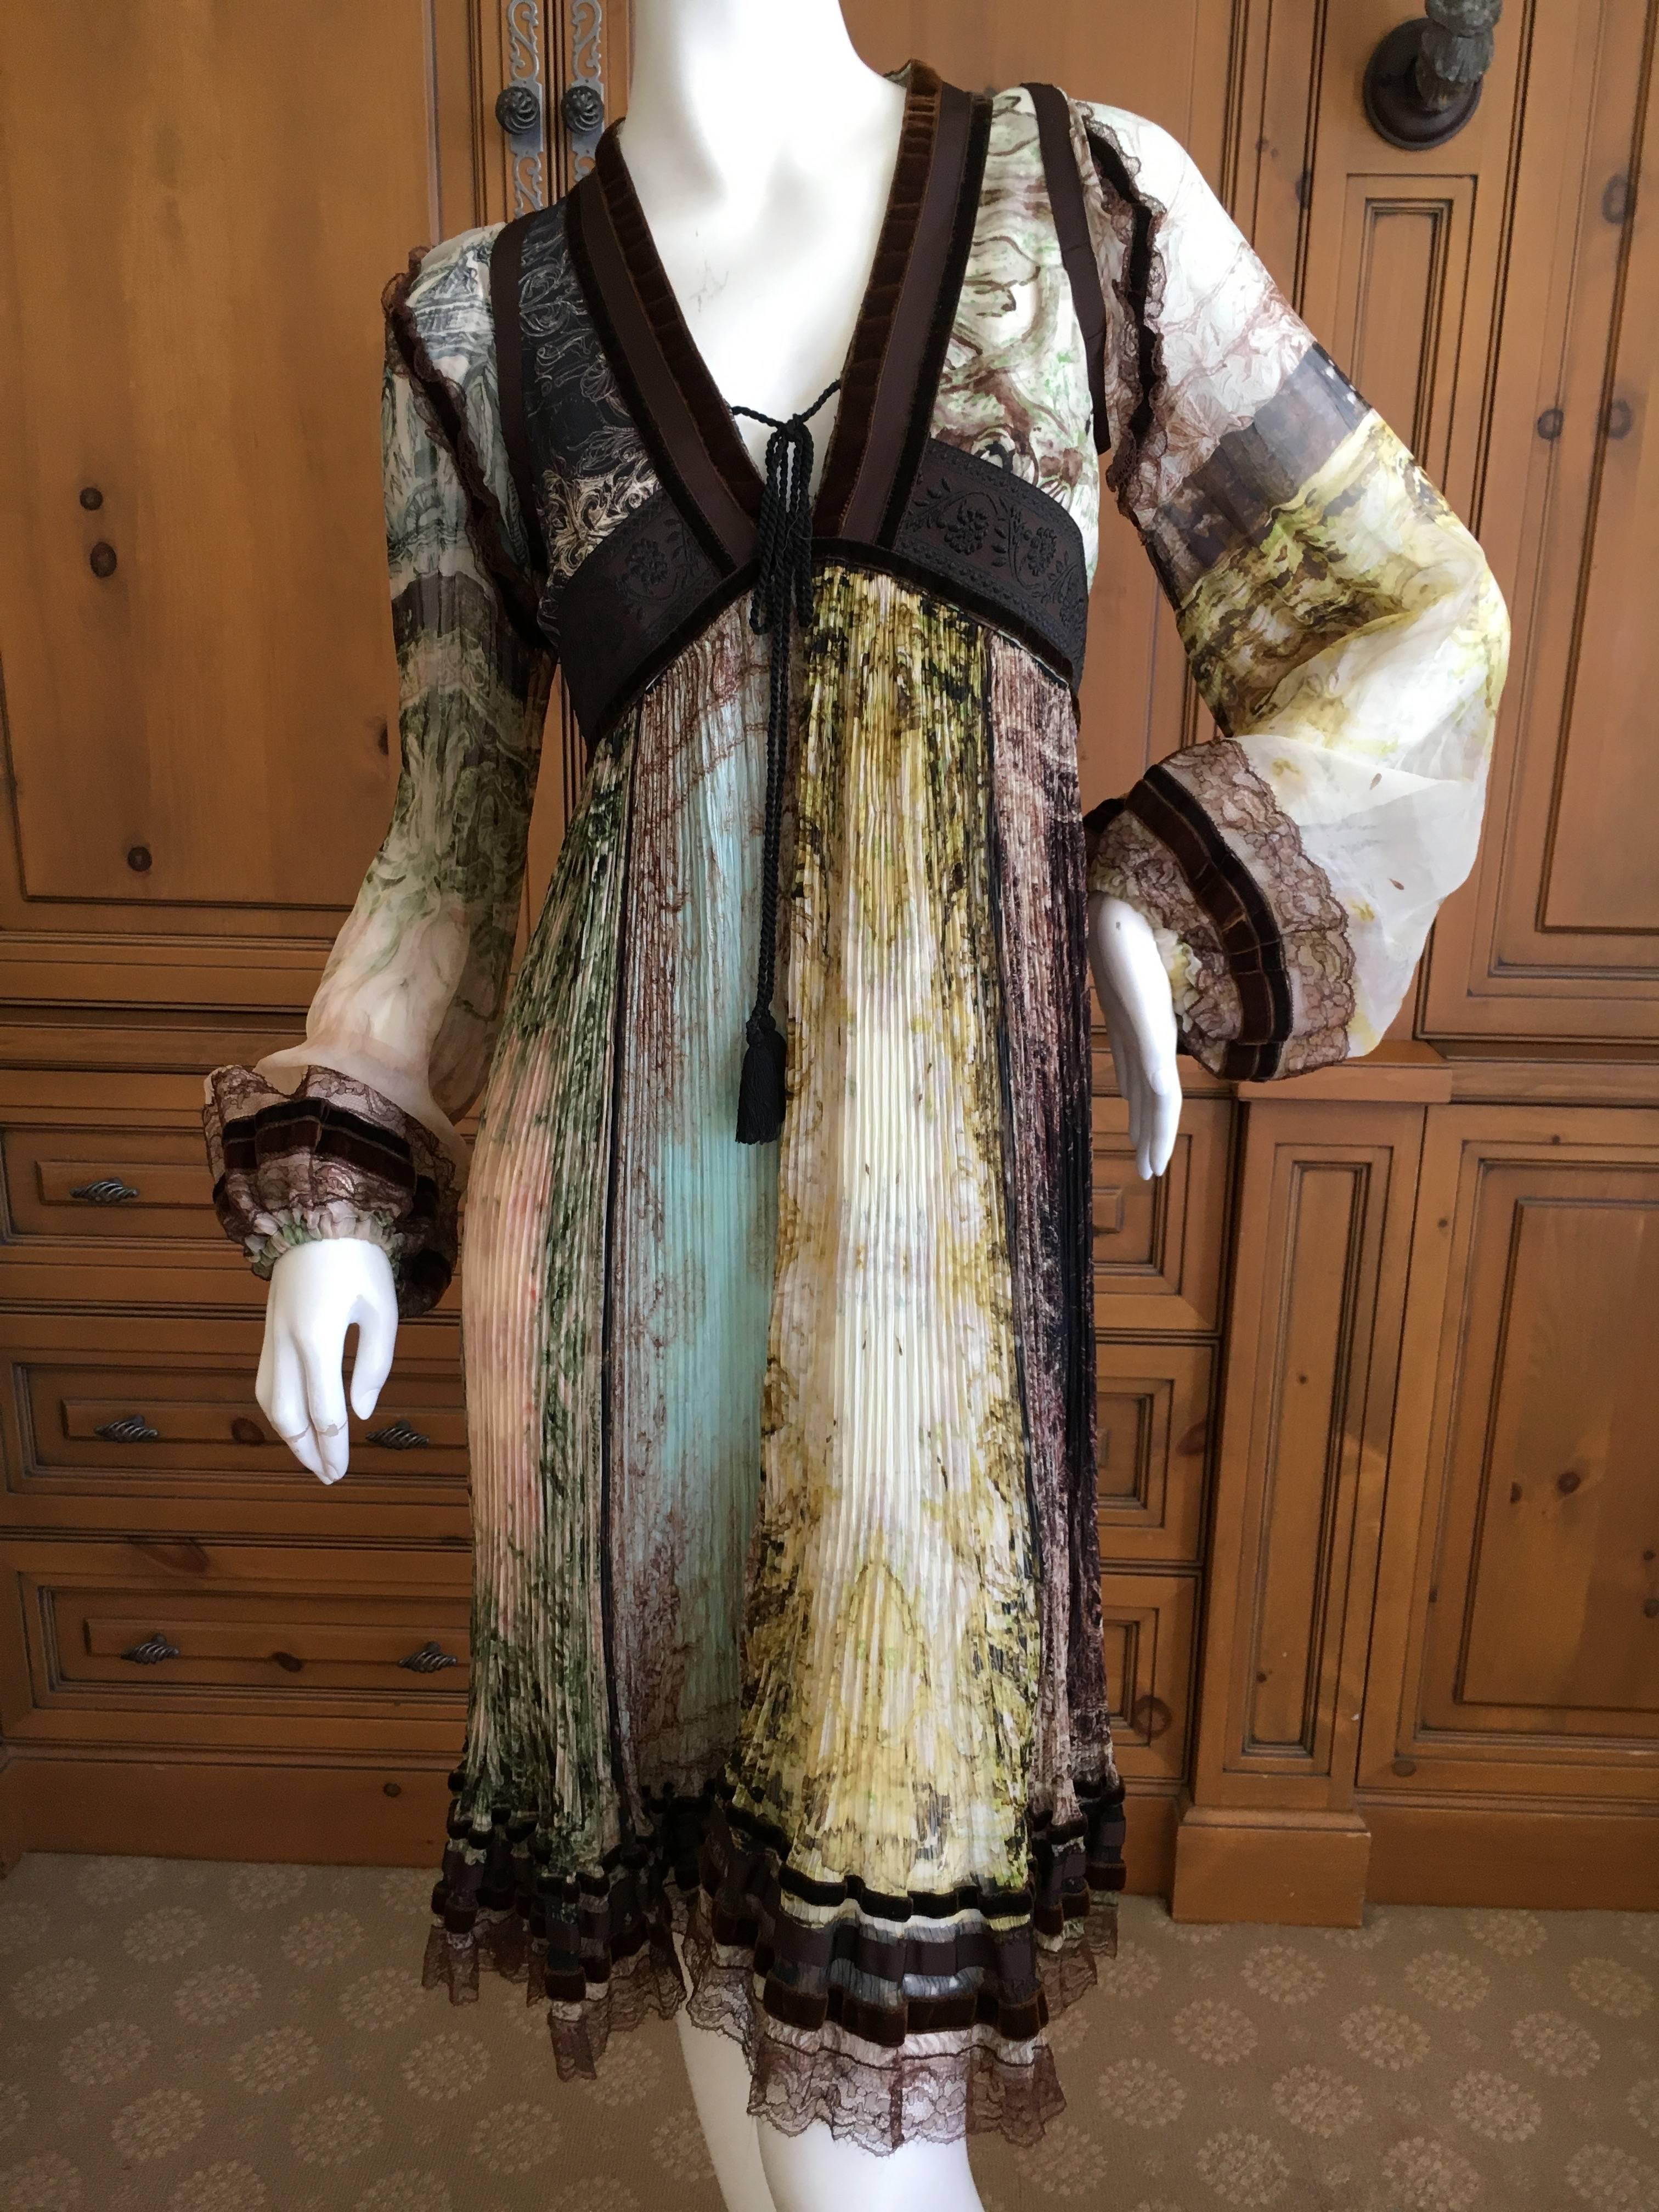 Jean Paul Gaultier Femme Vintage Plisse Pleated Empire Dress with Velvet Trim

Size 36 French

Bust 34"

Waist 26"

Hips 41"

Length 32"

Excellent condition